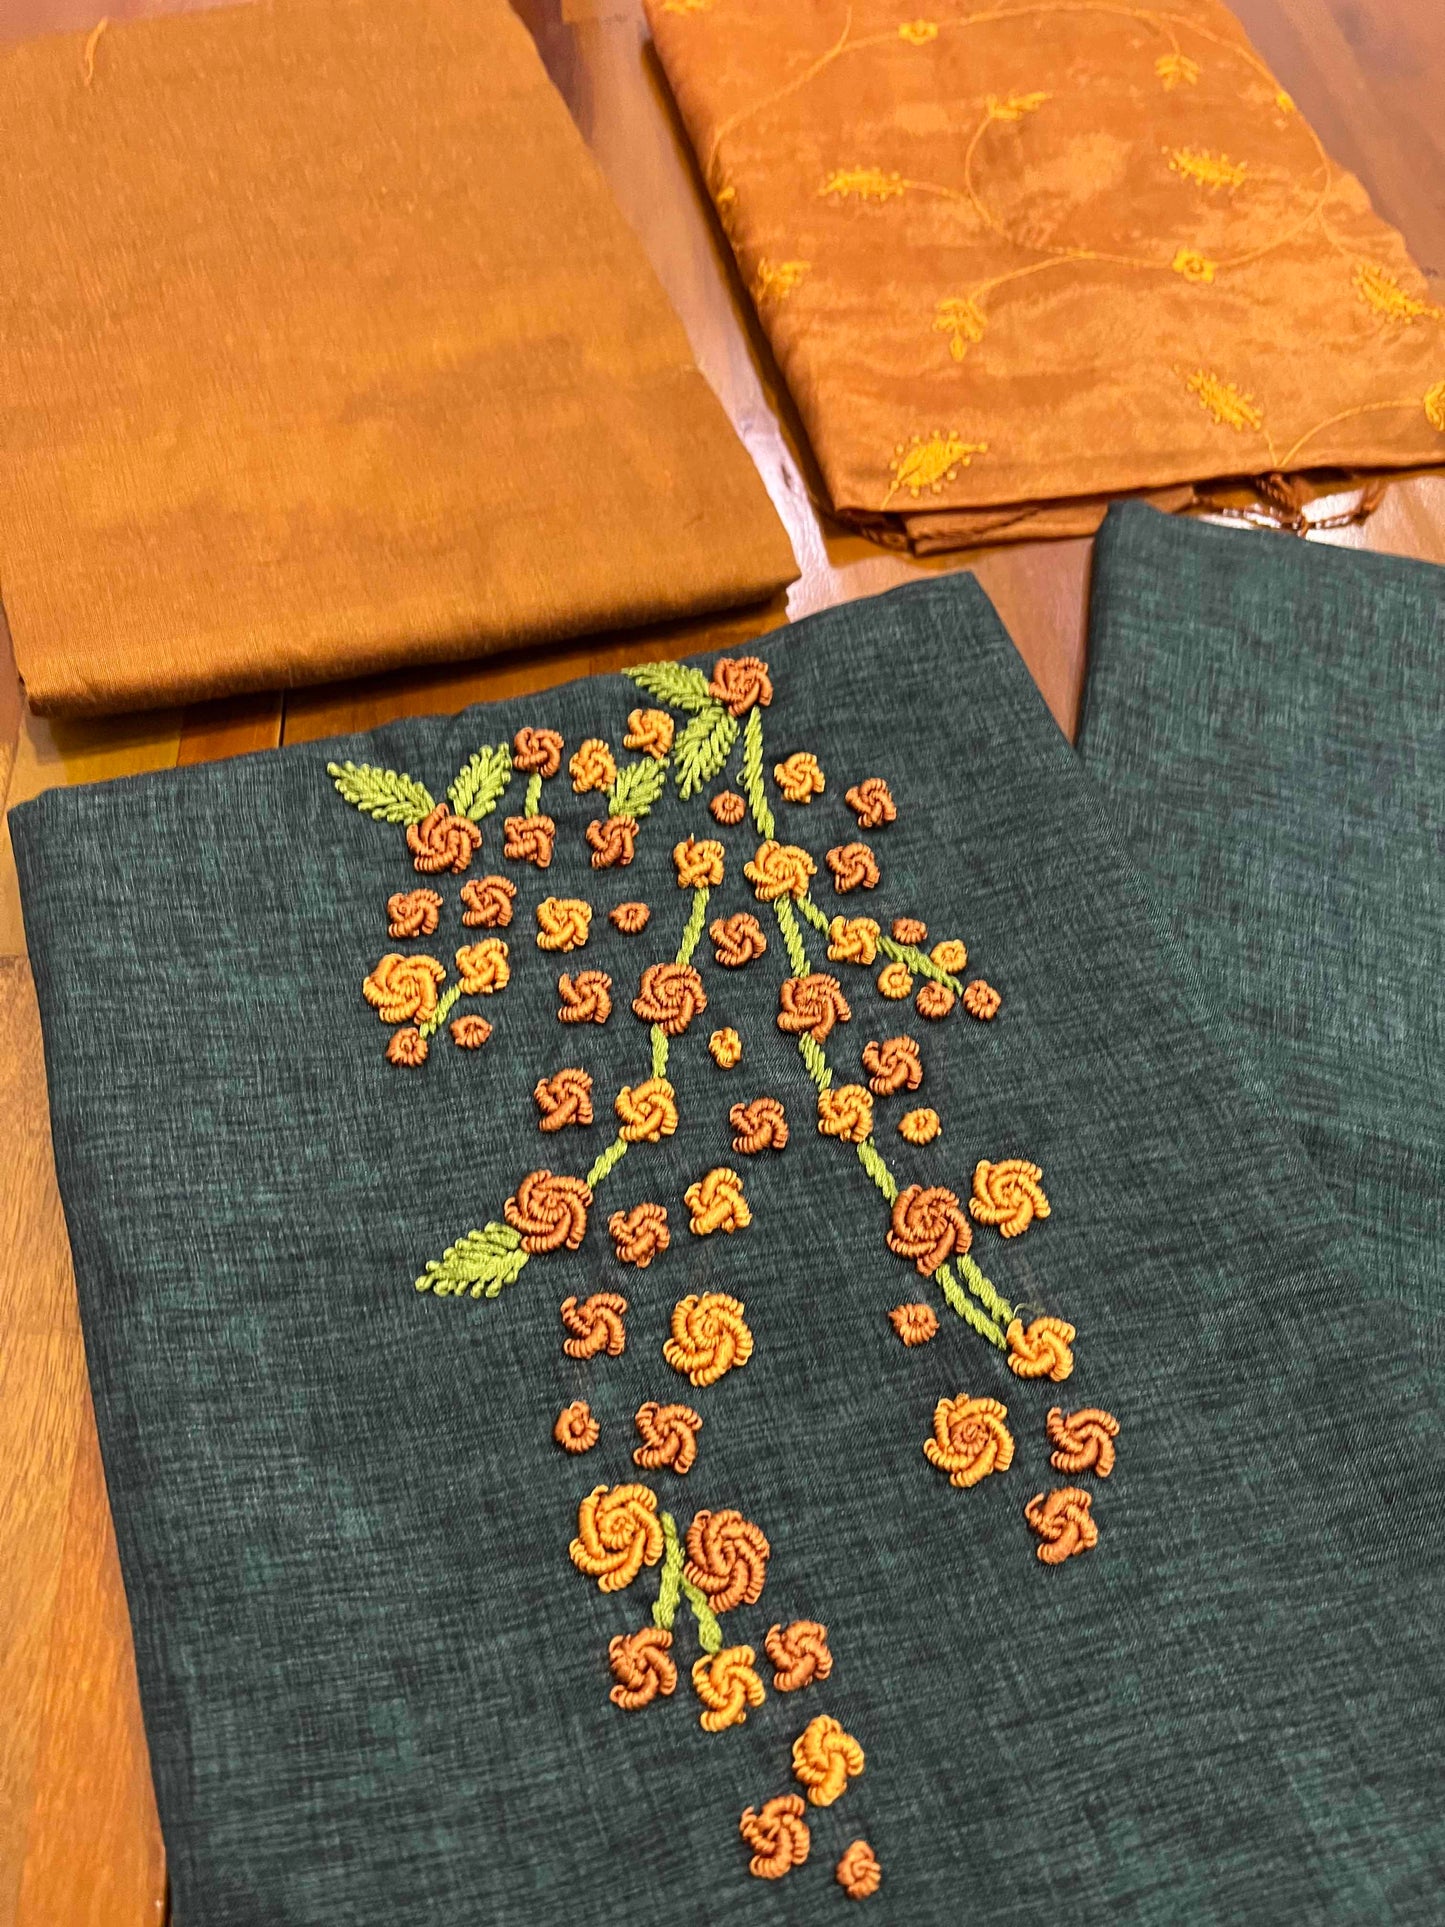 Southloom™ Semi Jute Churidar Salwar Suit Material in Dark Green and Orange with Embroidery Work